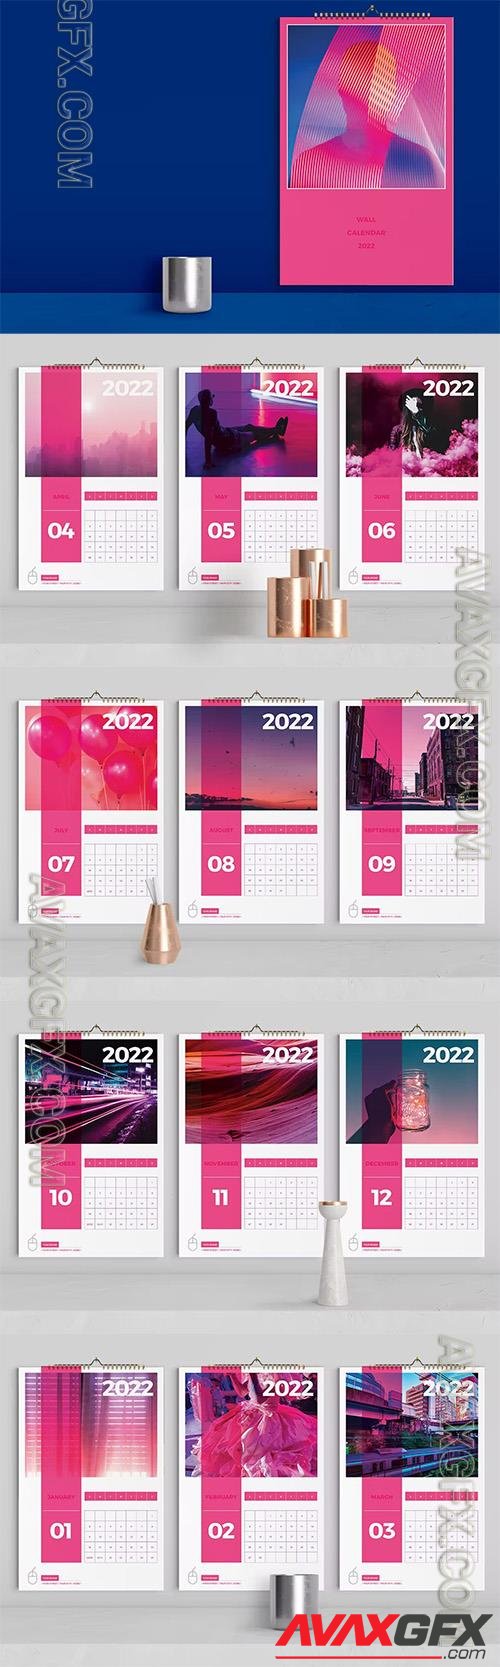 Pink Lifestyle Wall Calendar 2022